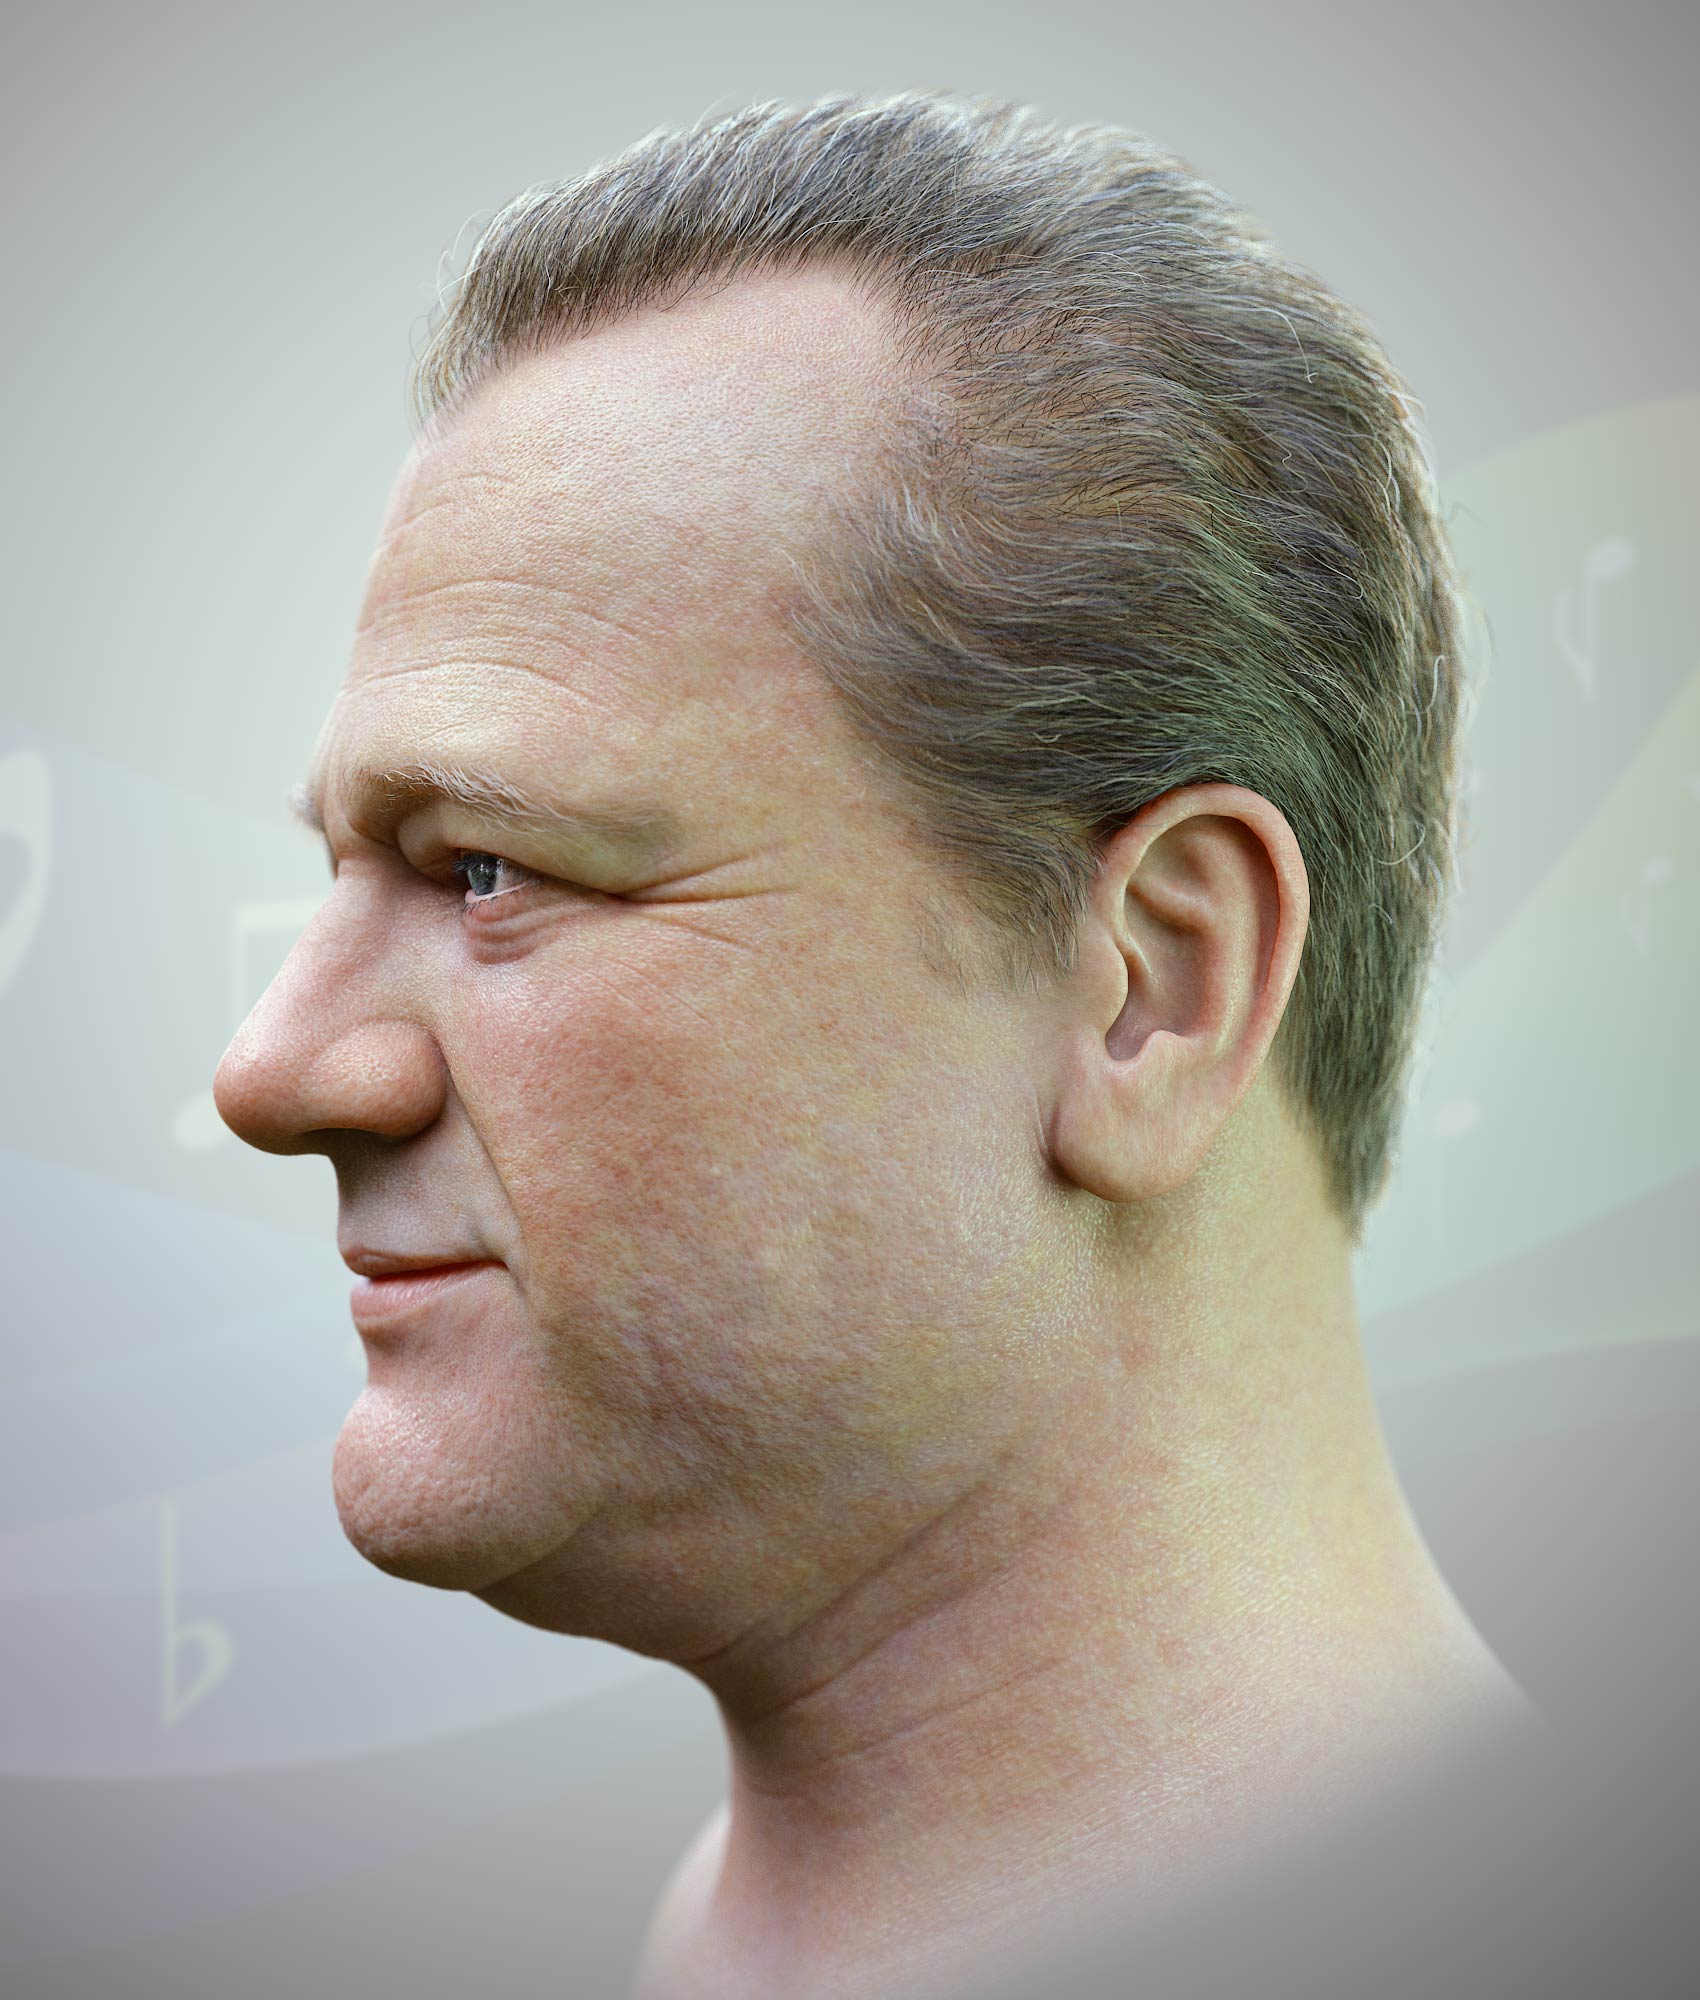 slavko_avsenik_Hyper_Realistic_3D_Portraits_maya_arnold-1 Slavko Avsenik - 3D-Digitaler Klon. Virtuelle Kopfrekonstruktion